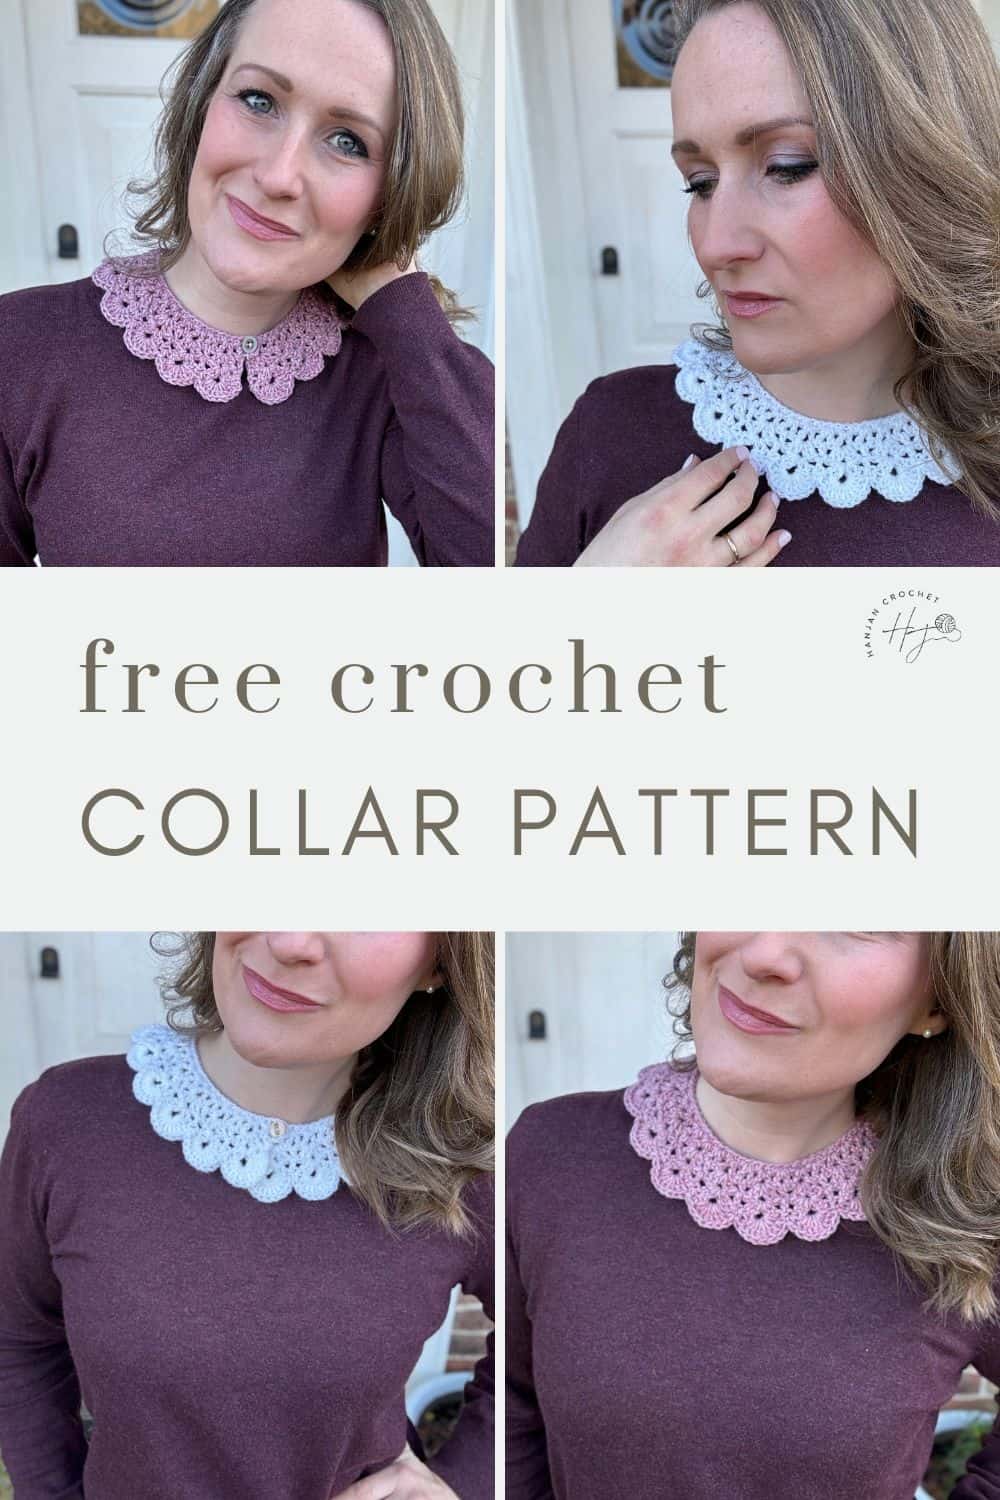 Free crochet collar pattern.